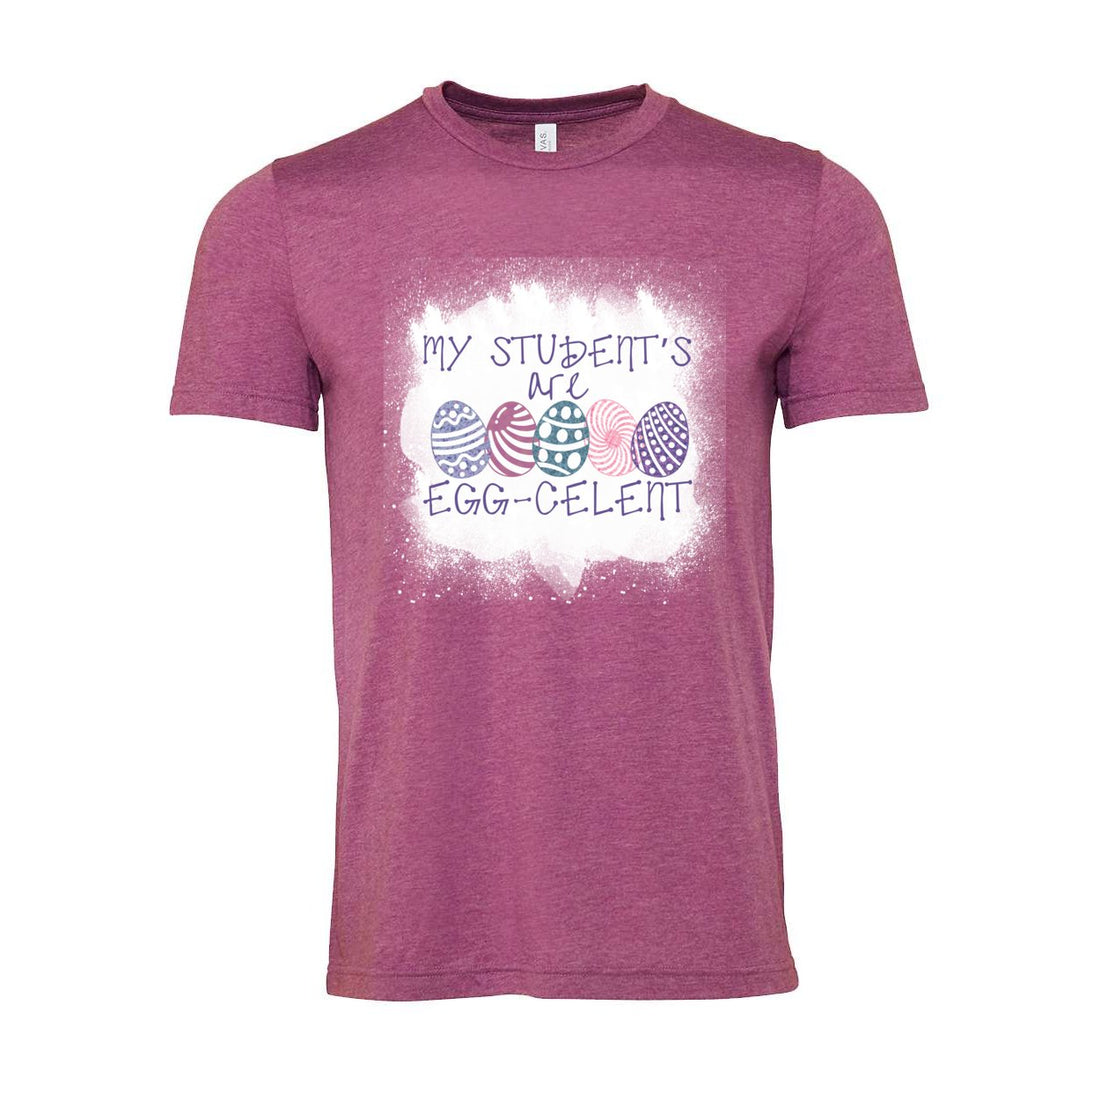 Eggcelent Students Tee - T-Shirts - Positively Sassy - Eggcelent Students Tee